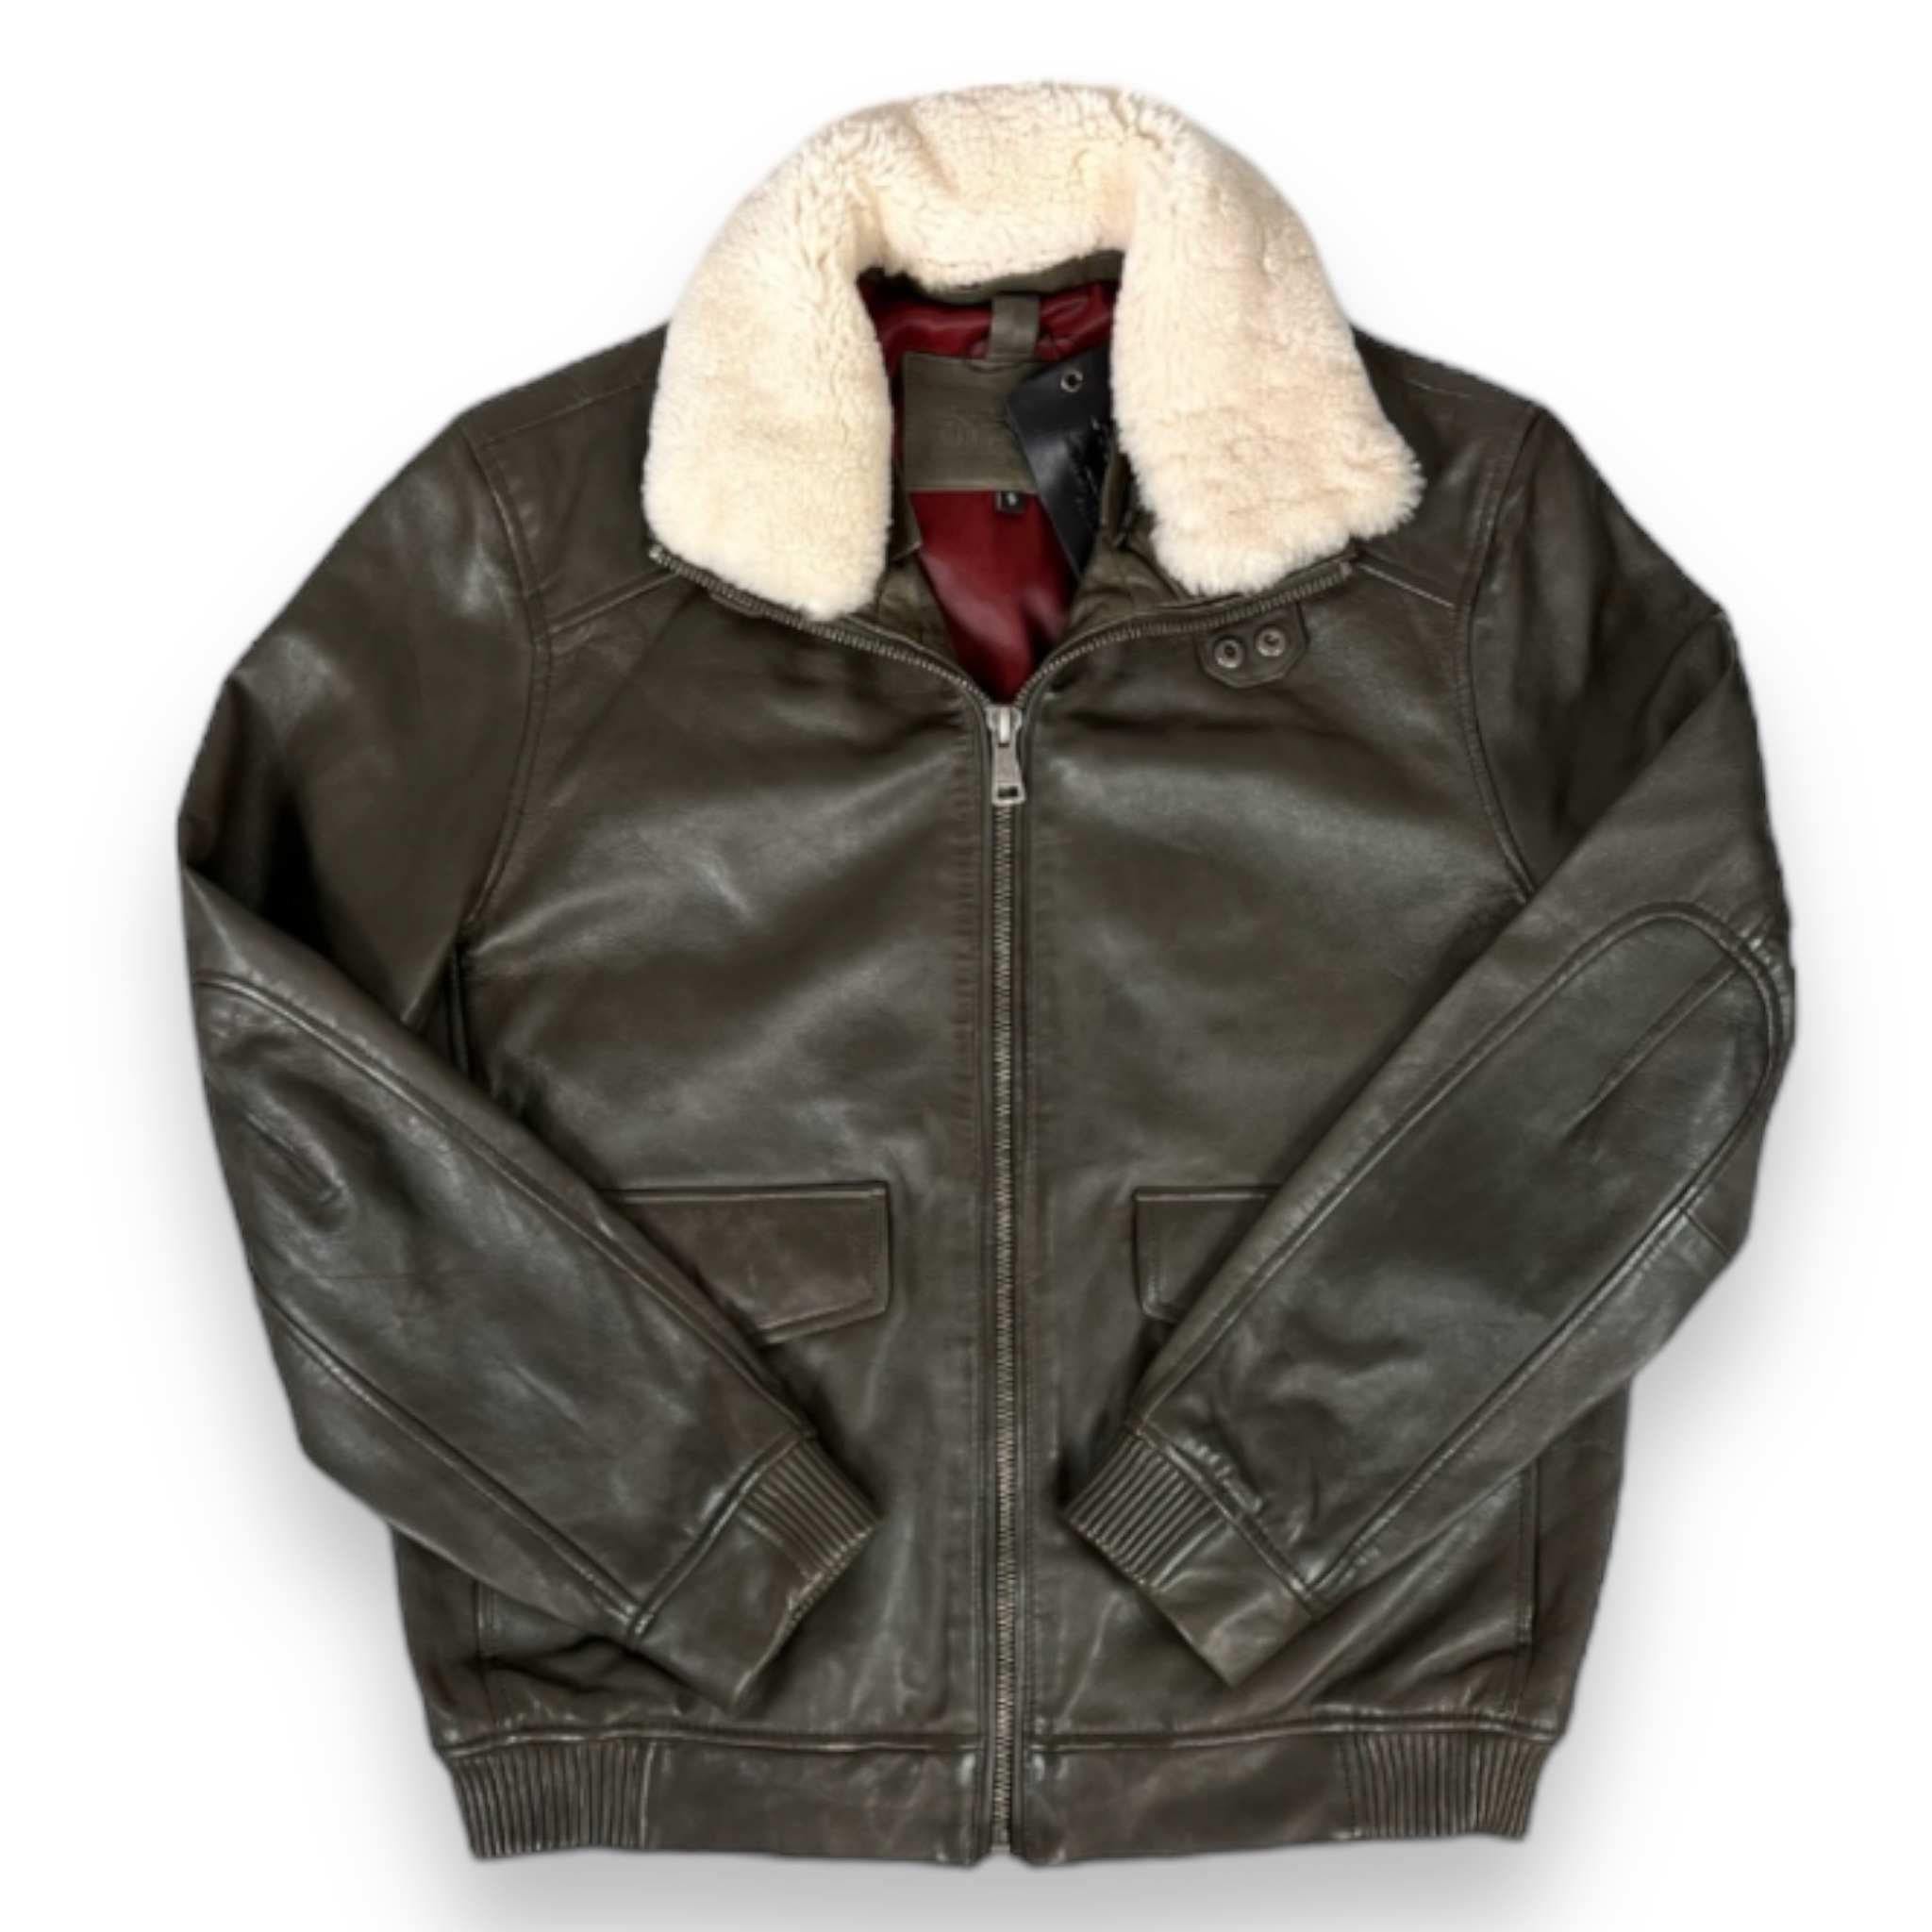 Aviator Leather Jacket - Daniel's Leather